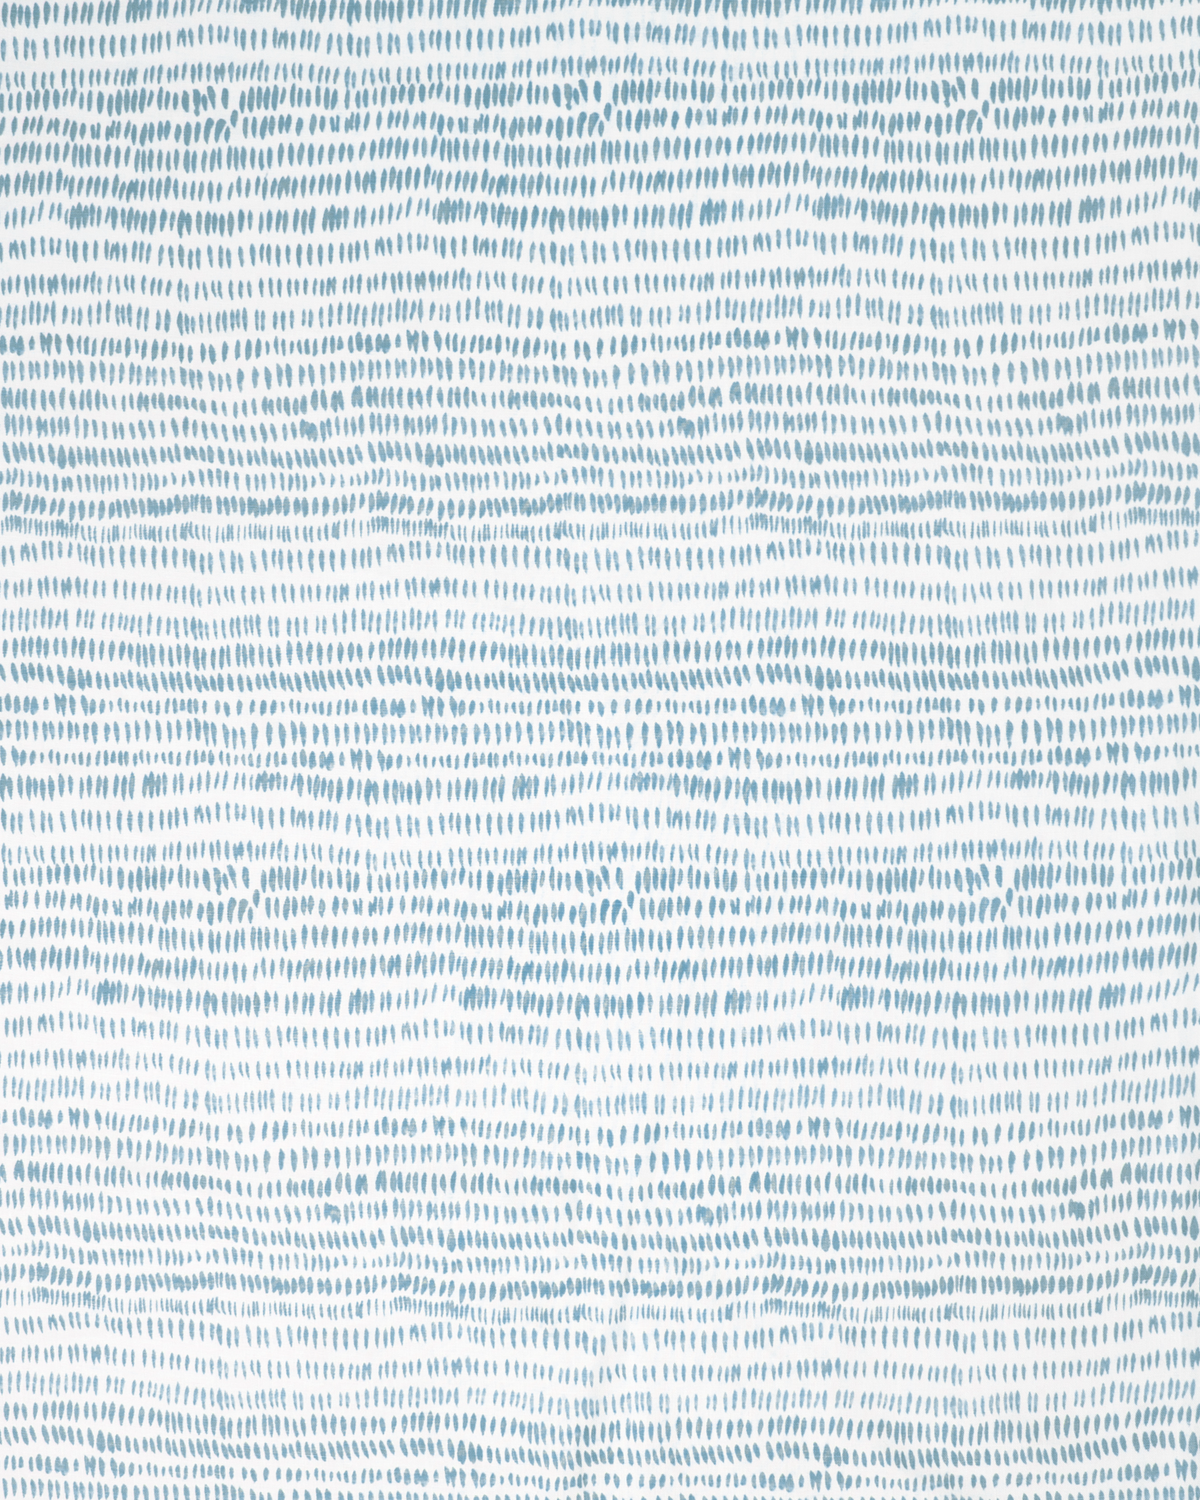 Dashes Fabric in Ocean Blue